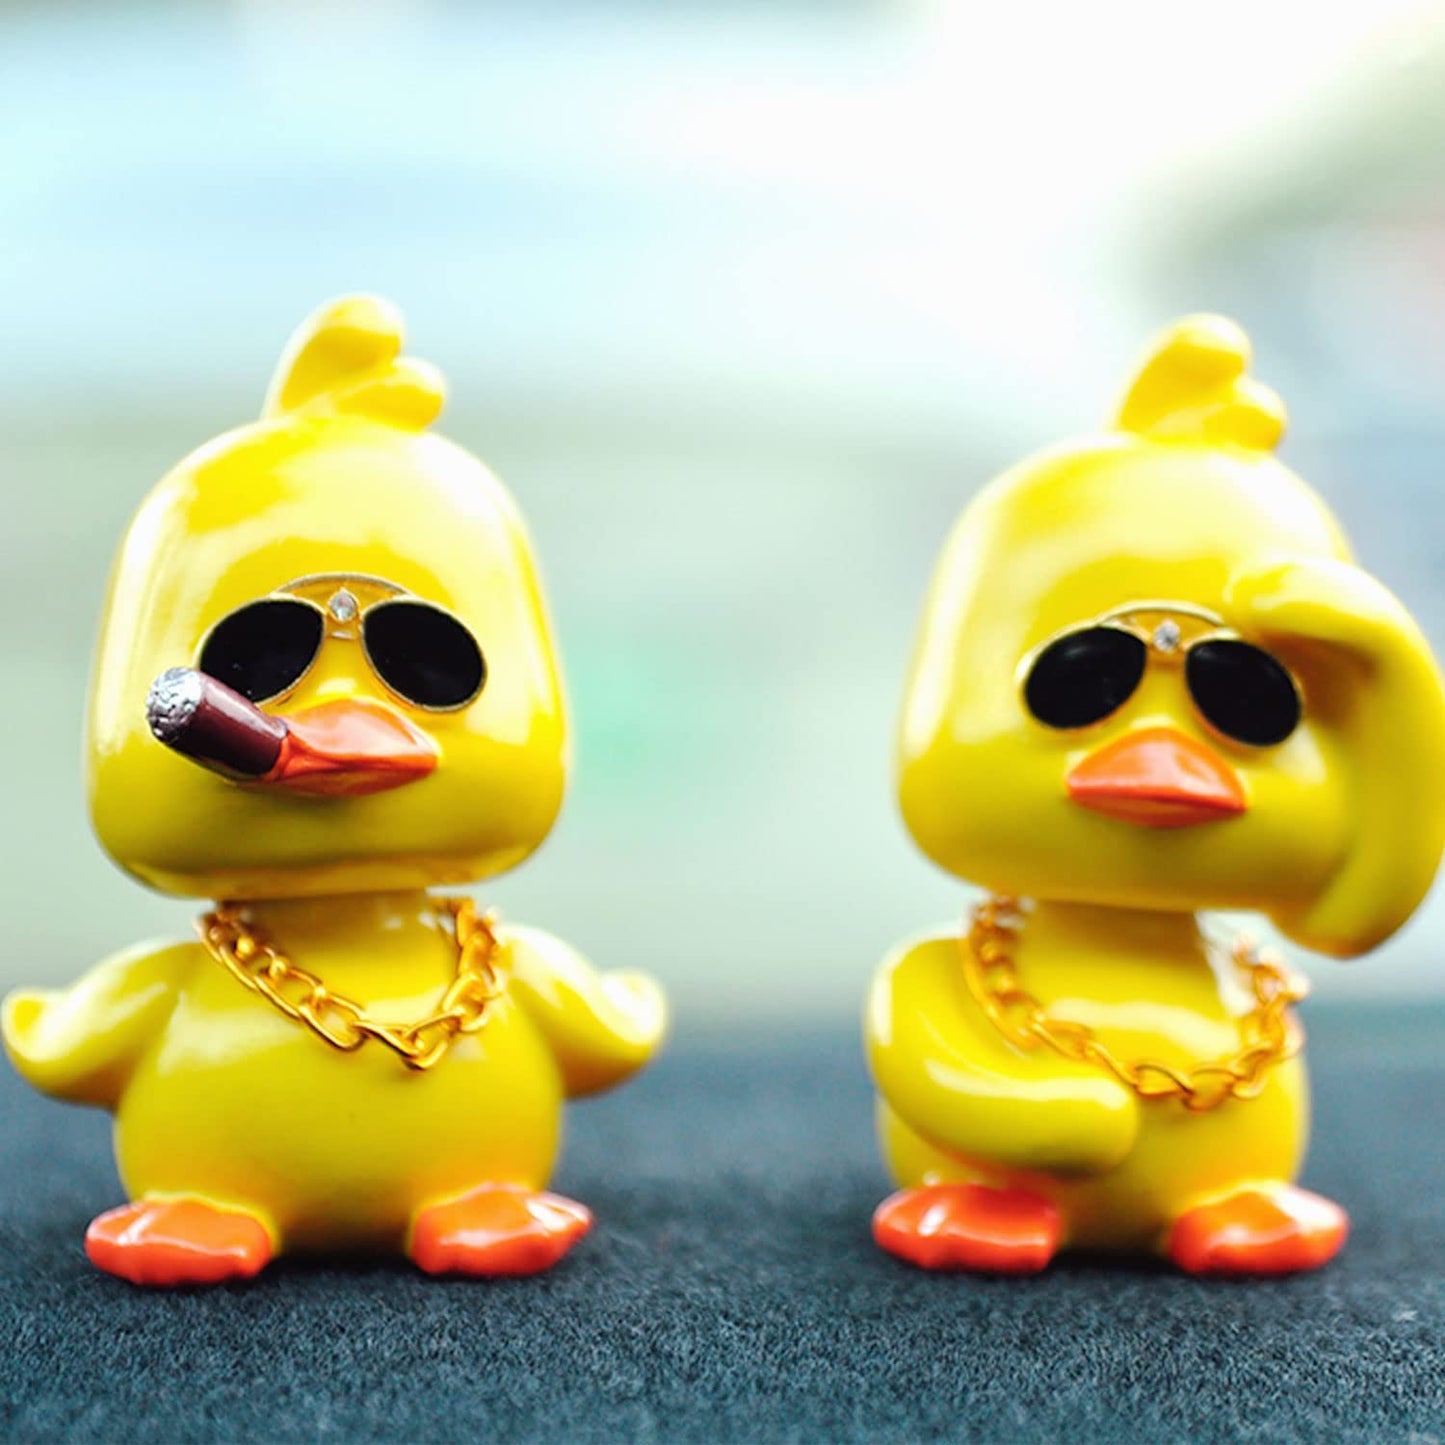 Cute Yellow Duck Car Ornaments Funny Duck Car Toy